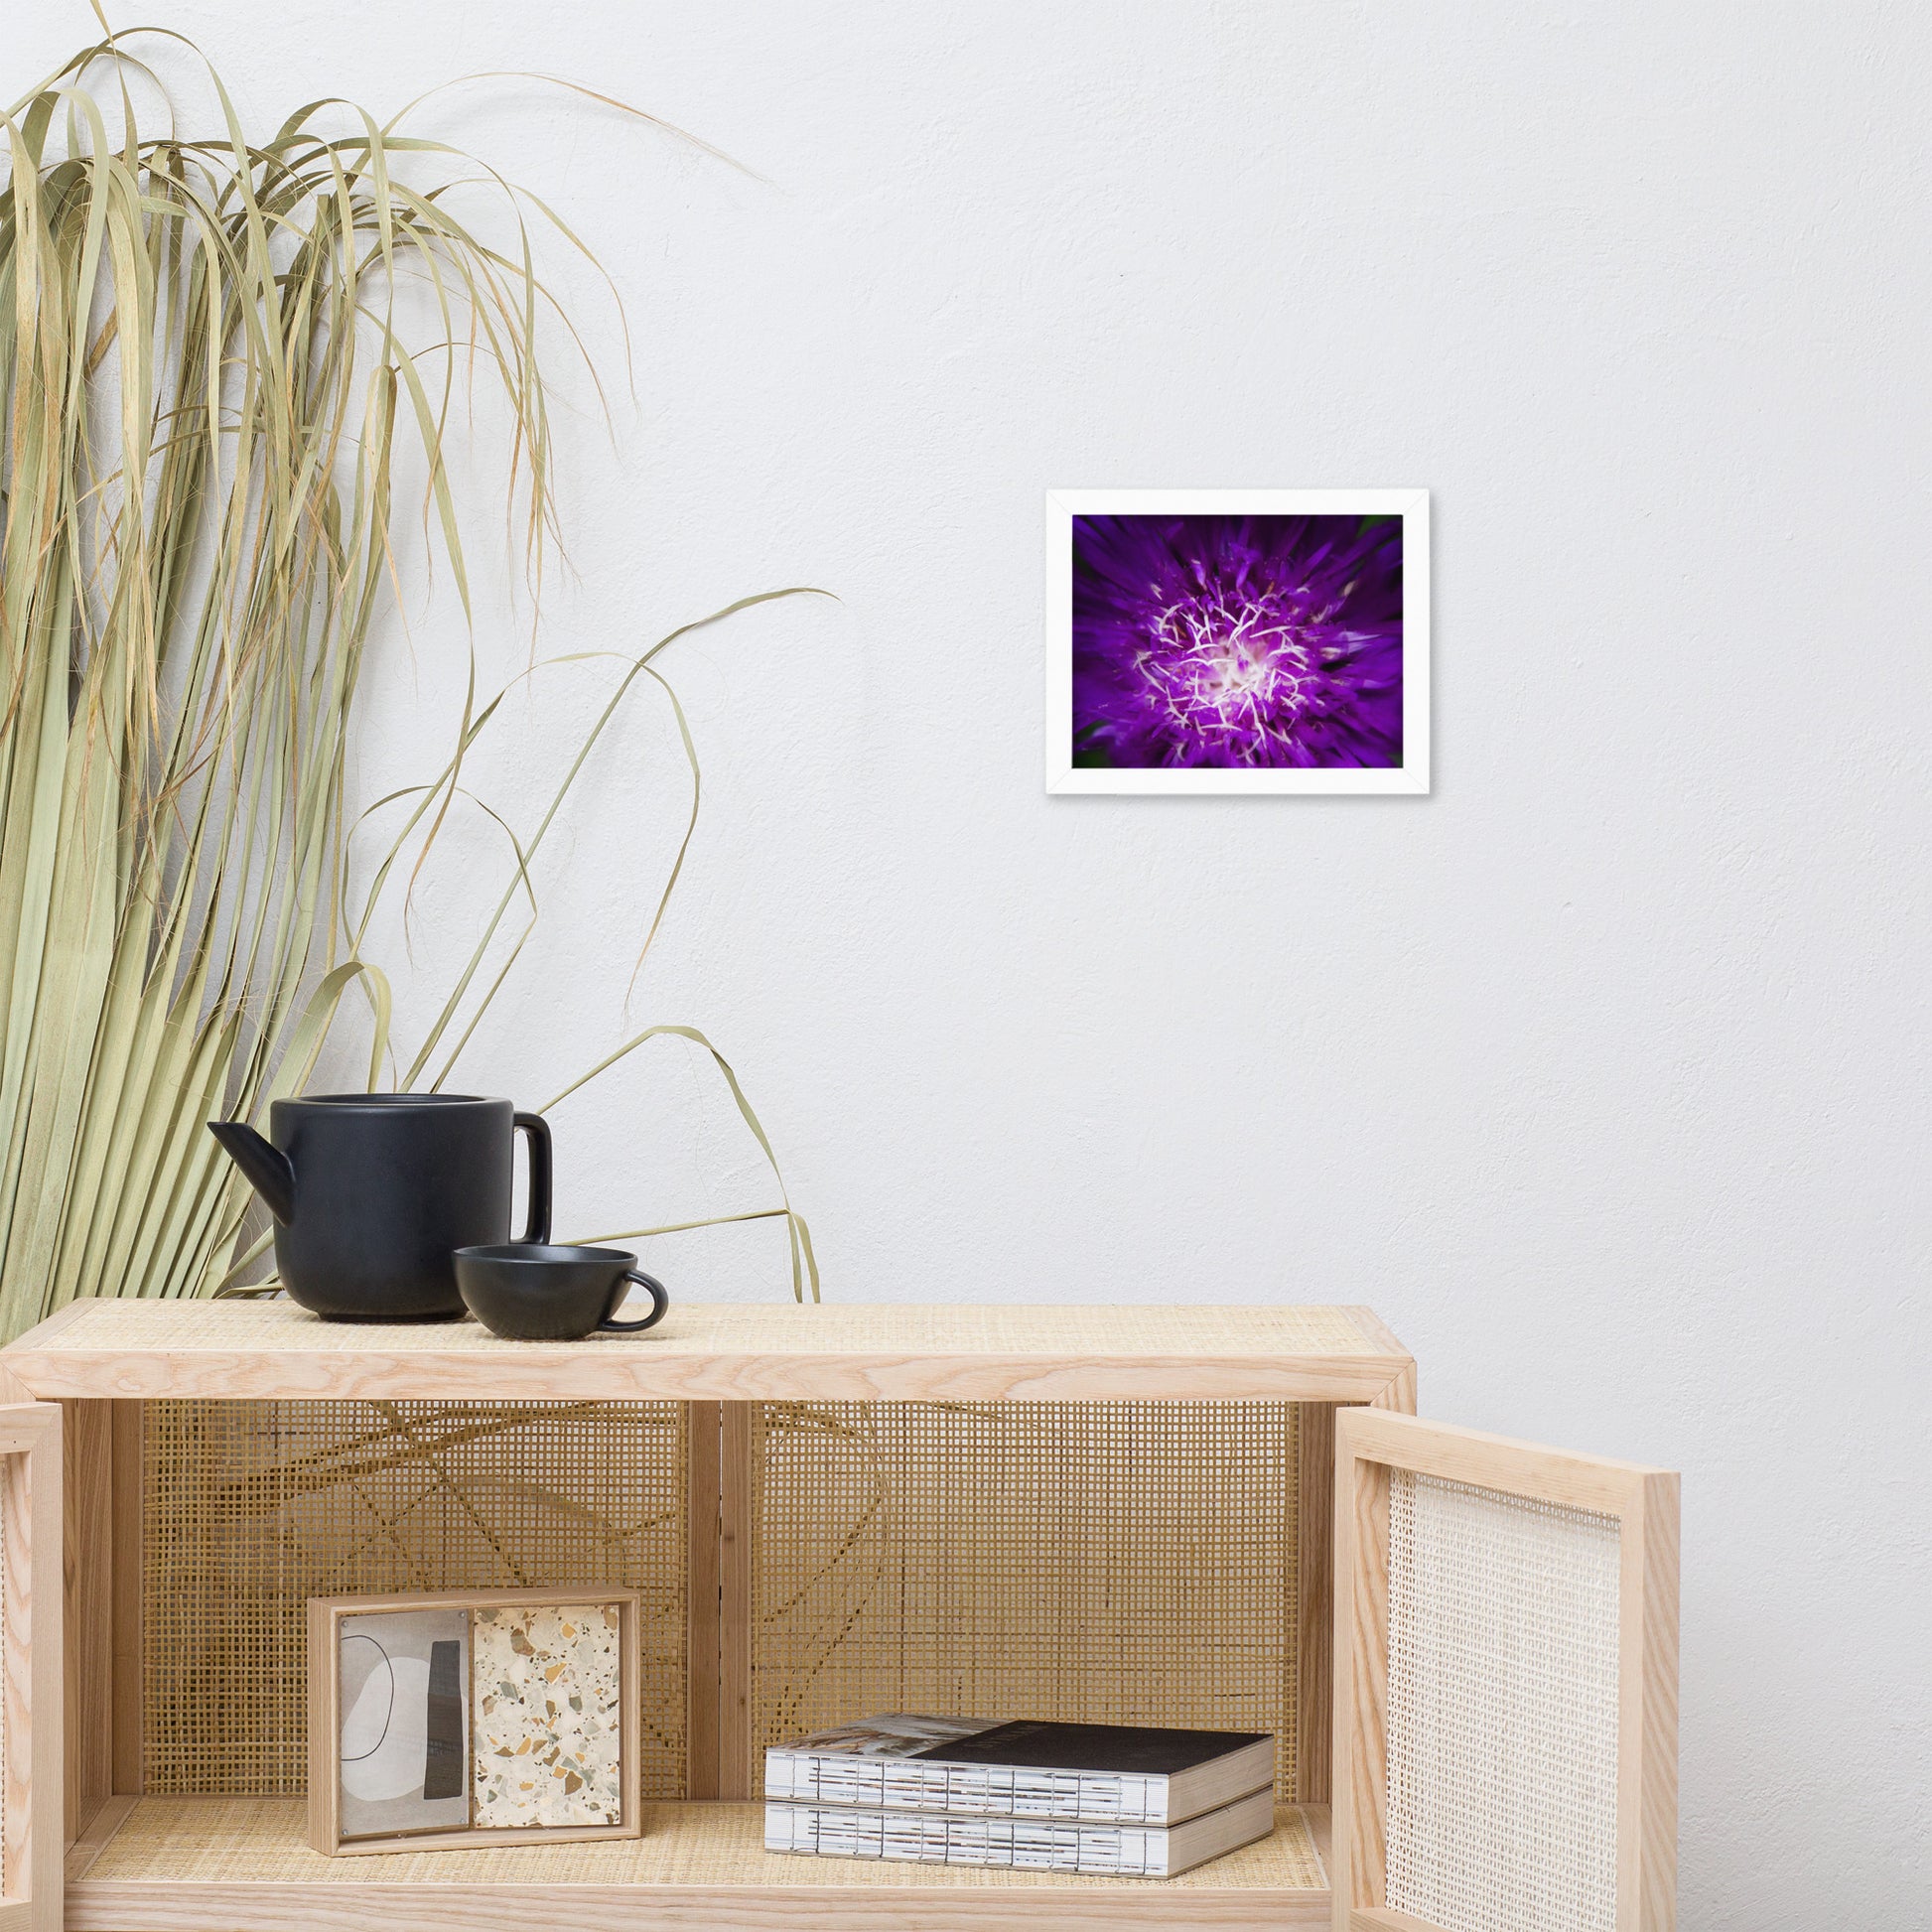 Modern Prints For Living Room: Purple Abstract Flower - Botanical / Floral / Flora / Flowers / Nature Photograph Framed Wall Art Print - Artwork - Wall Decor